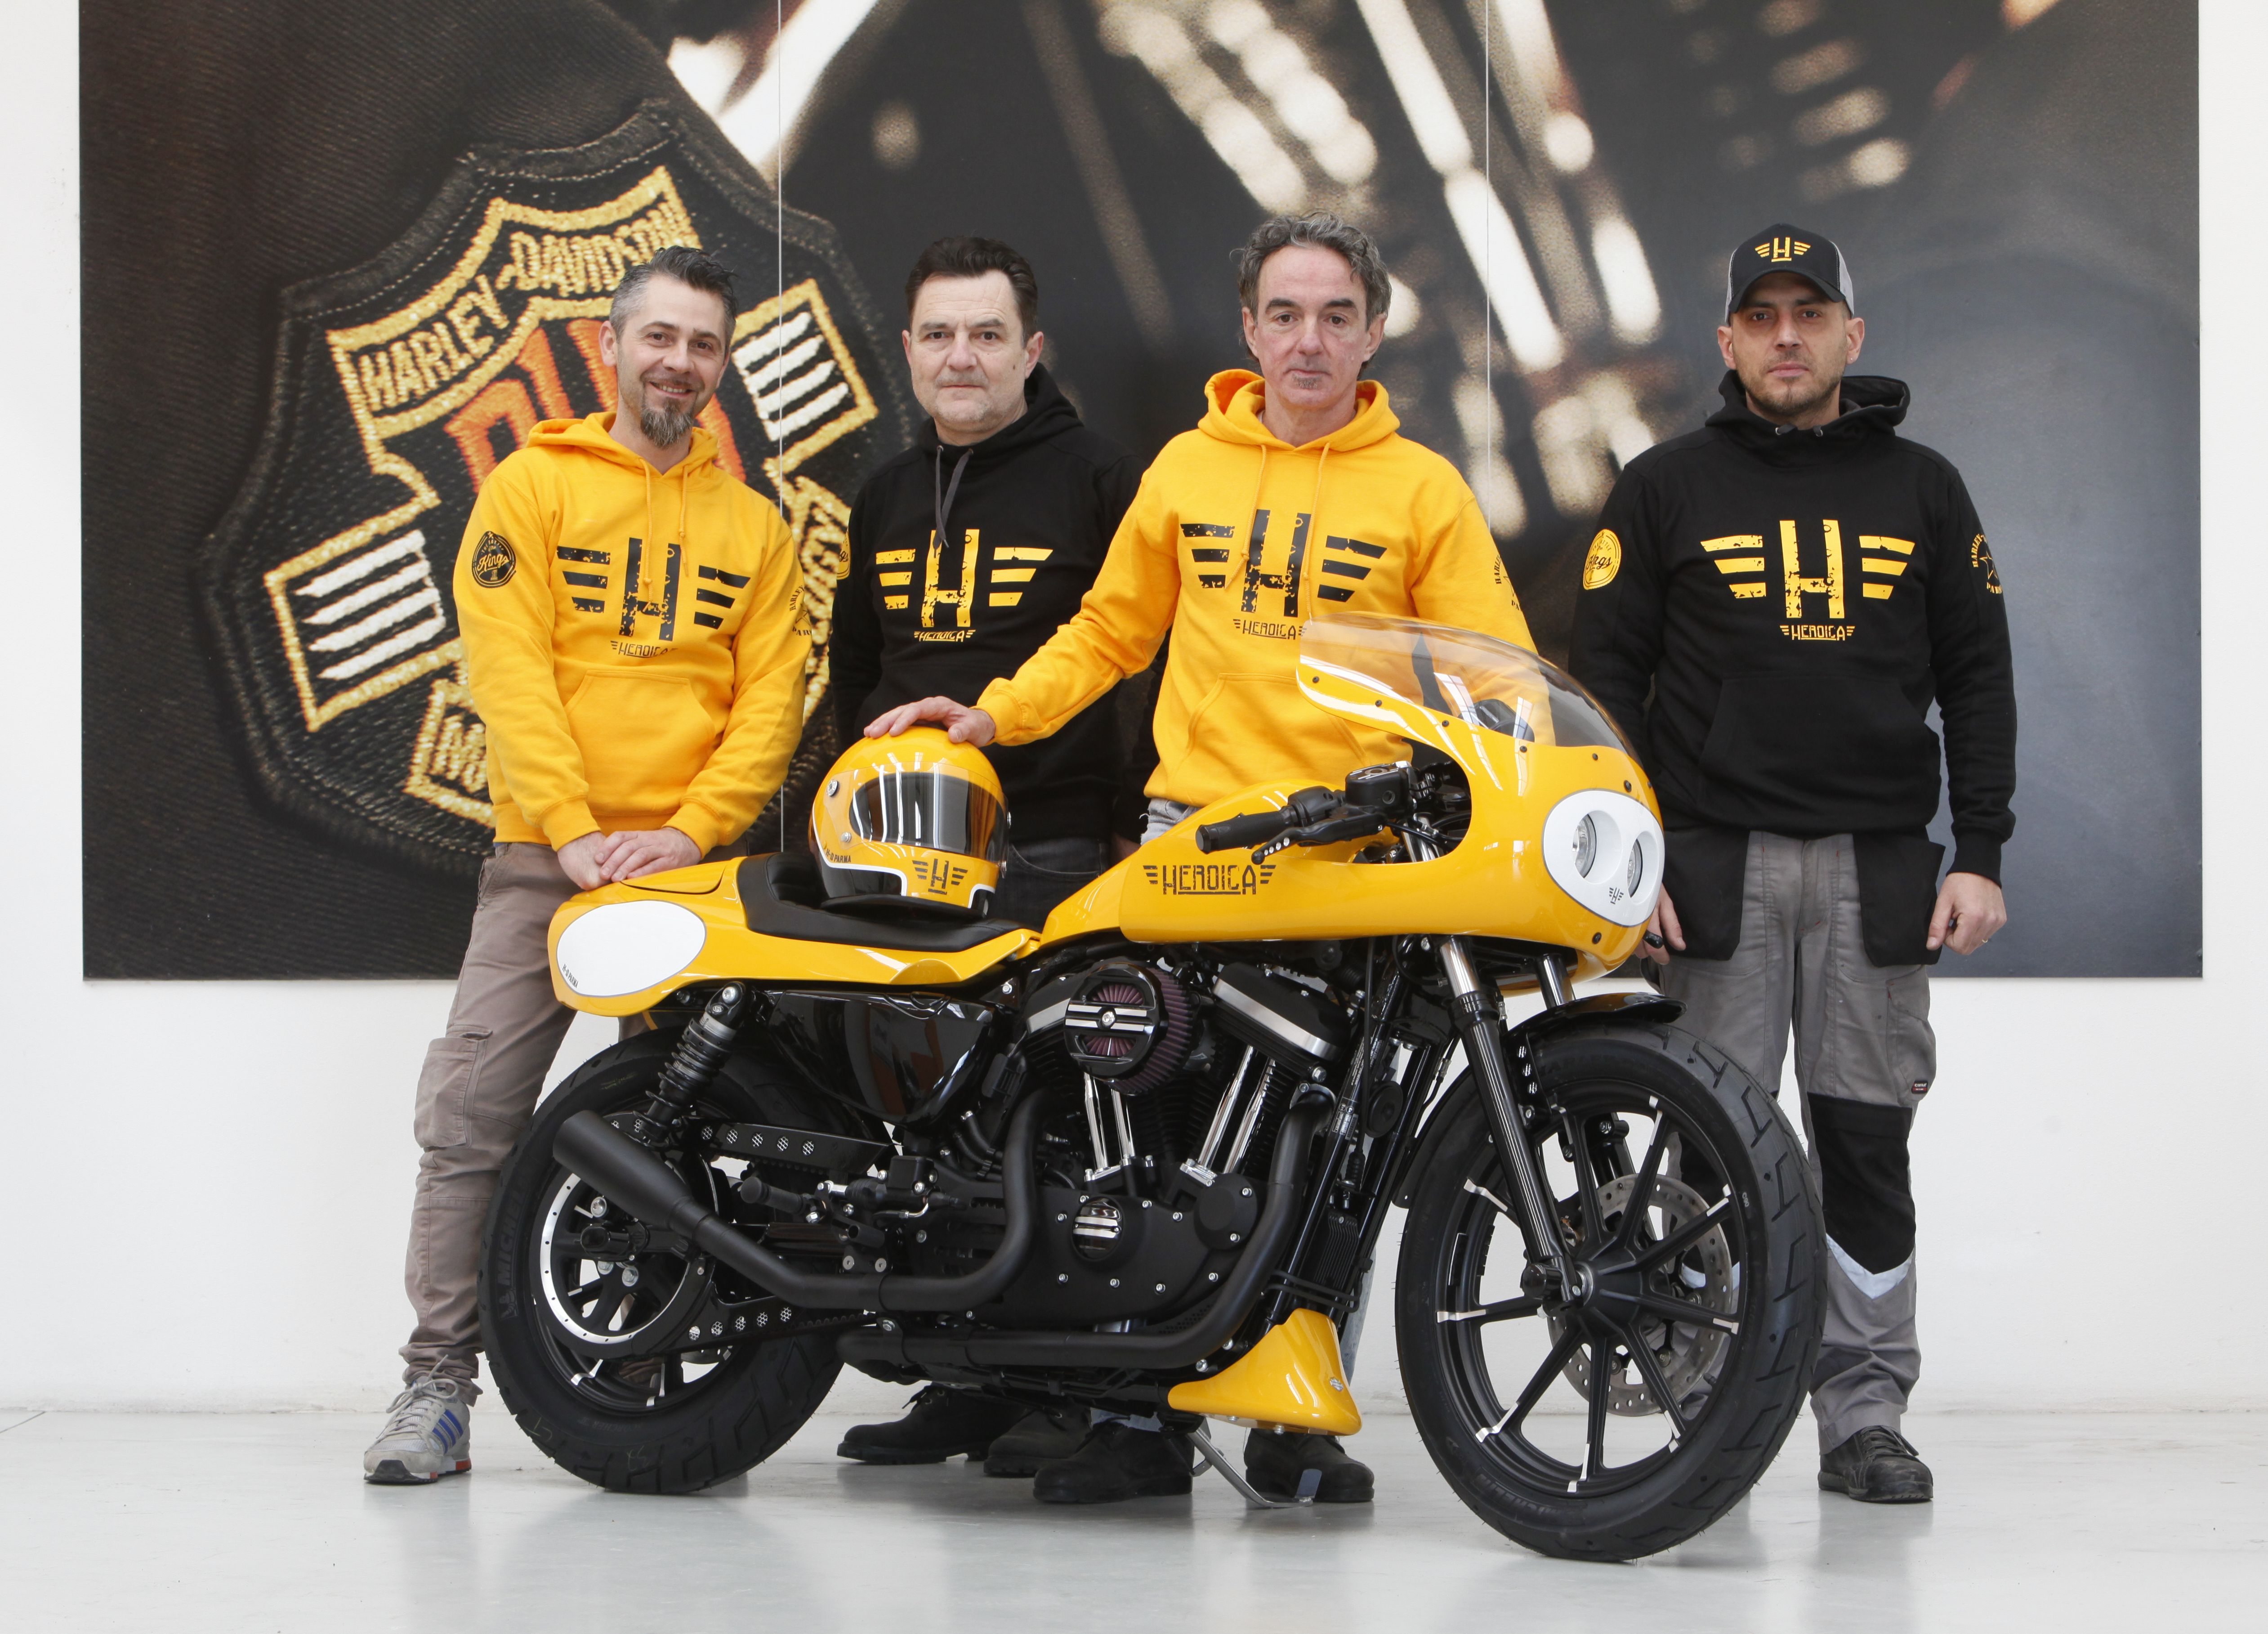 La “Heroica” di Harley Davidson Parma in vendita